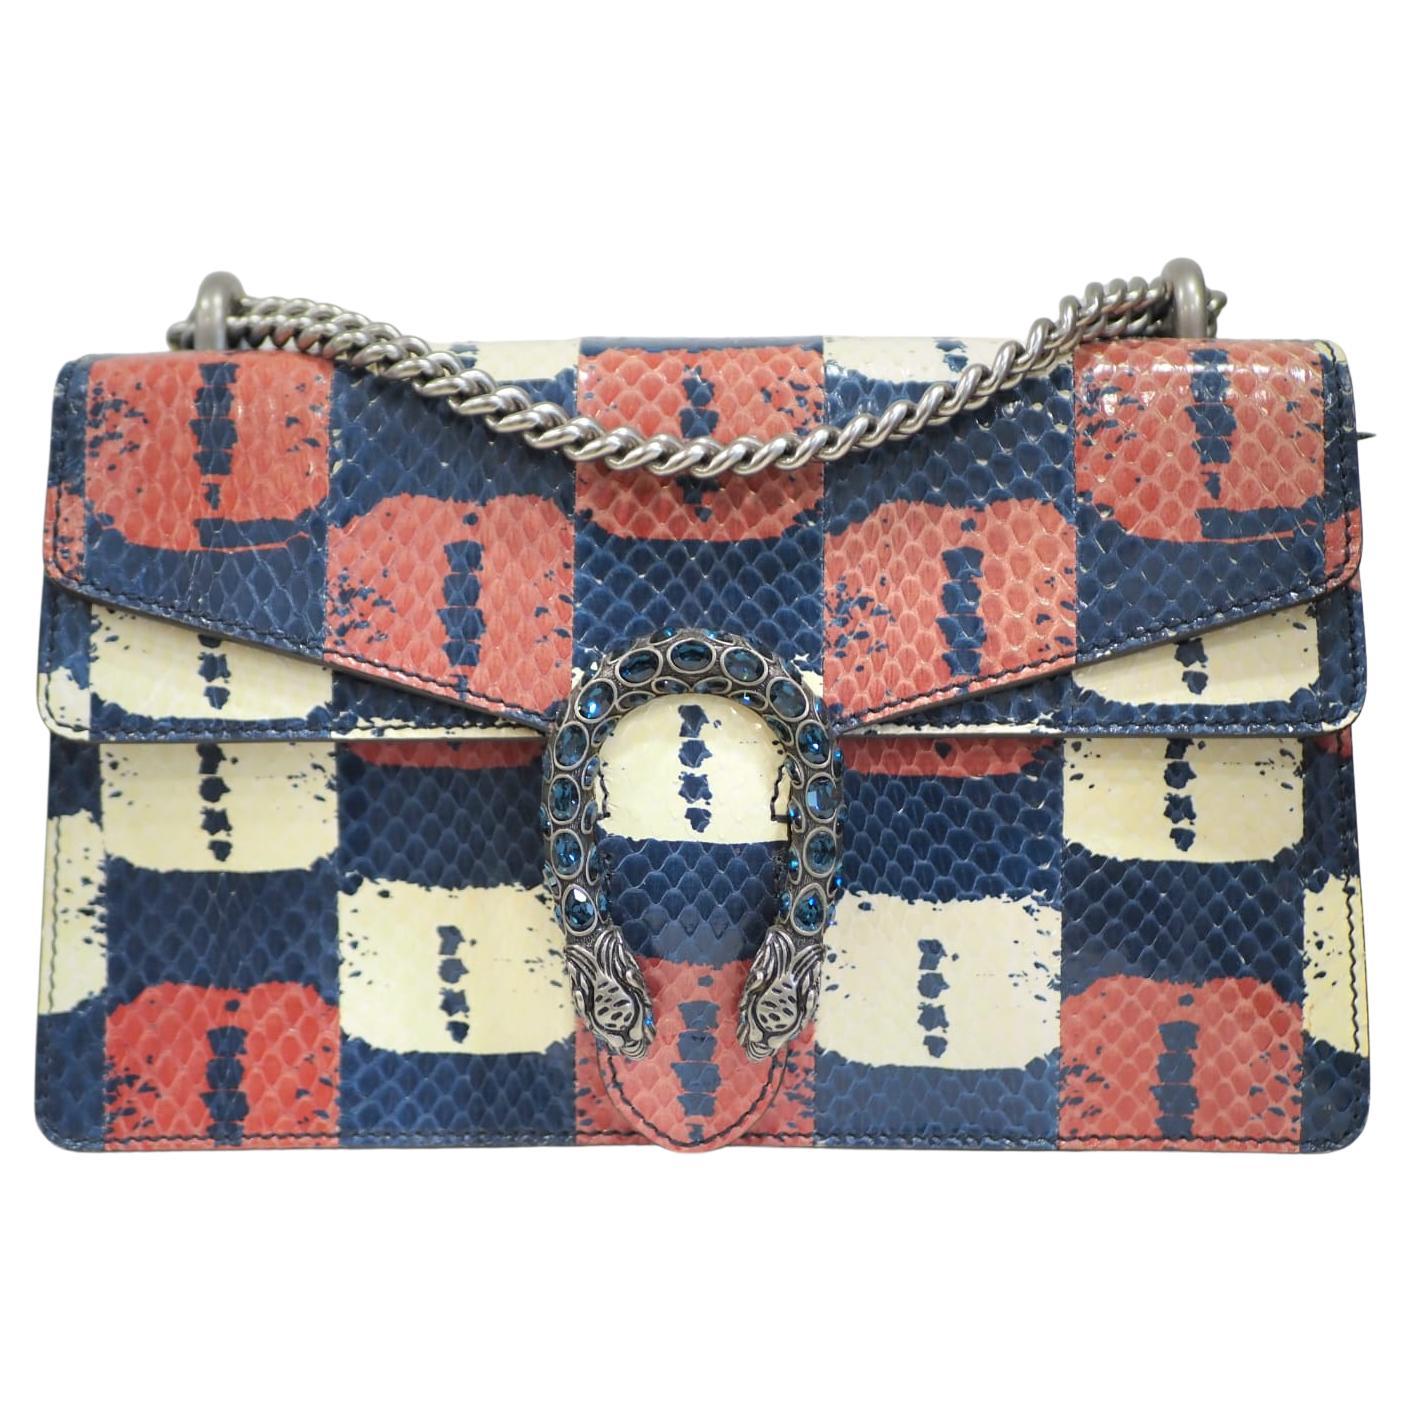 Gucci Dionysus multicoloured python leather shoulder bag